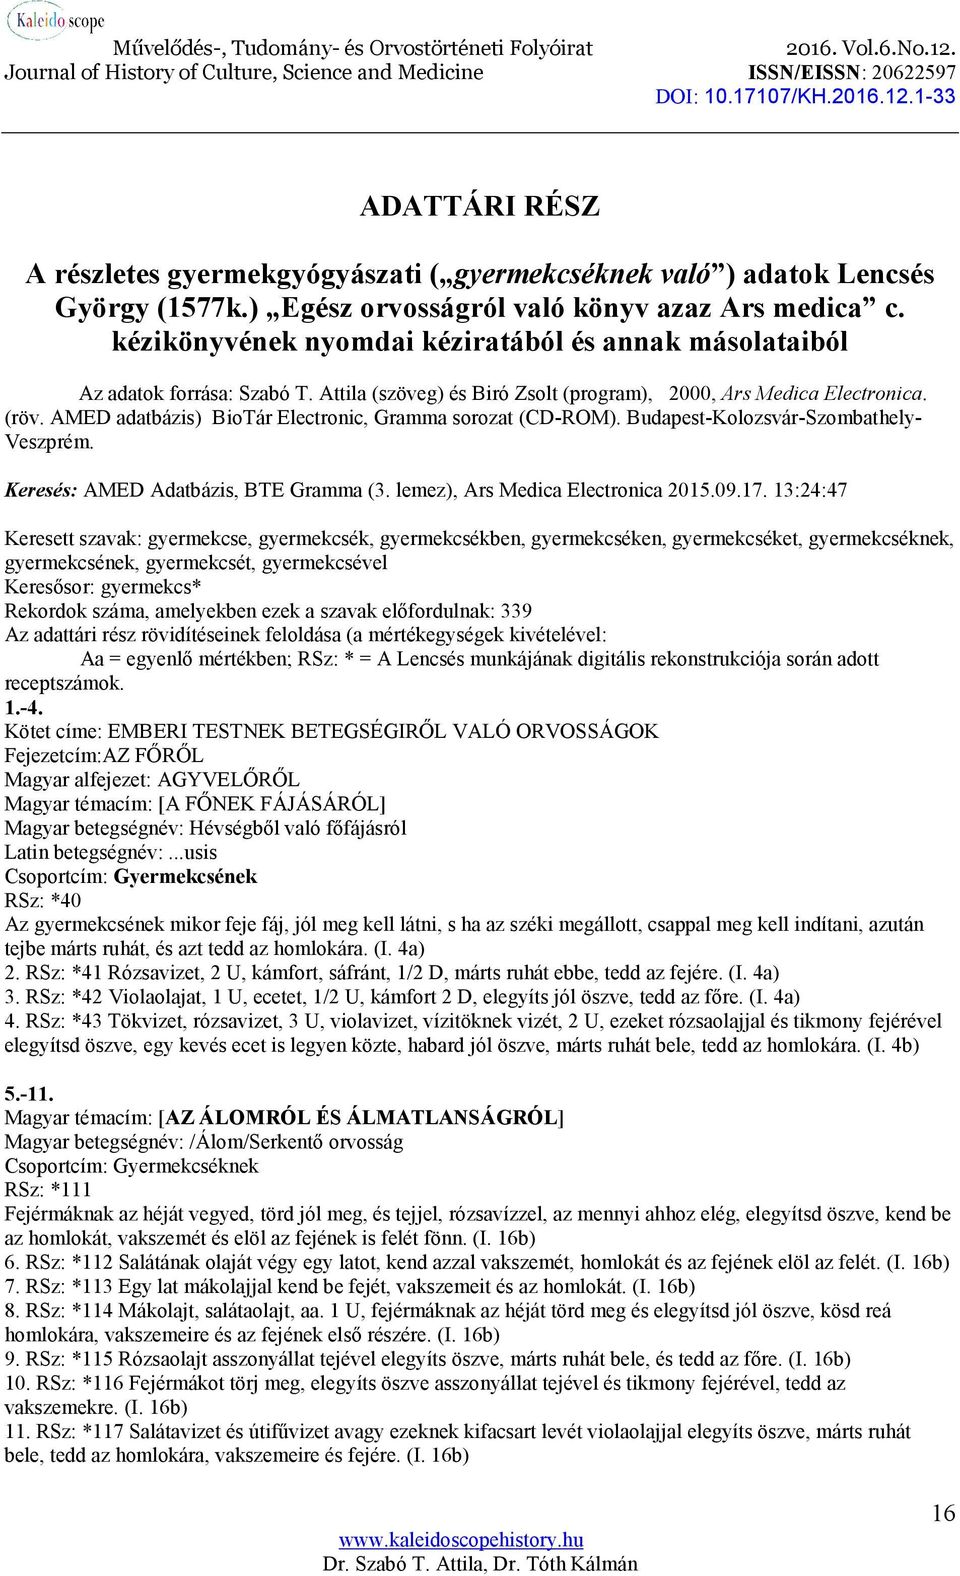 AMED adatbázis) BioTár Electronic, Gramma sorozat (CD-ROM). Budapest-Kolozsvár-Szombathely- Veszprém. Keresés: AMED Adatbázis, BTE Gramma (3. lemez), Ars Medica Electronica 2015.09.17.